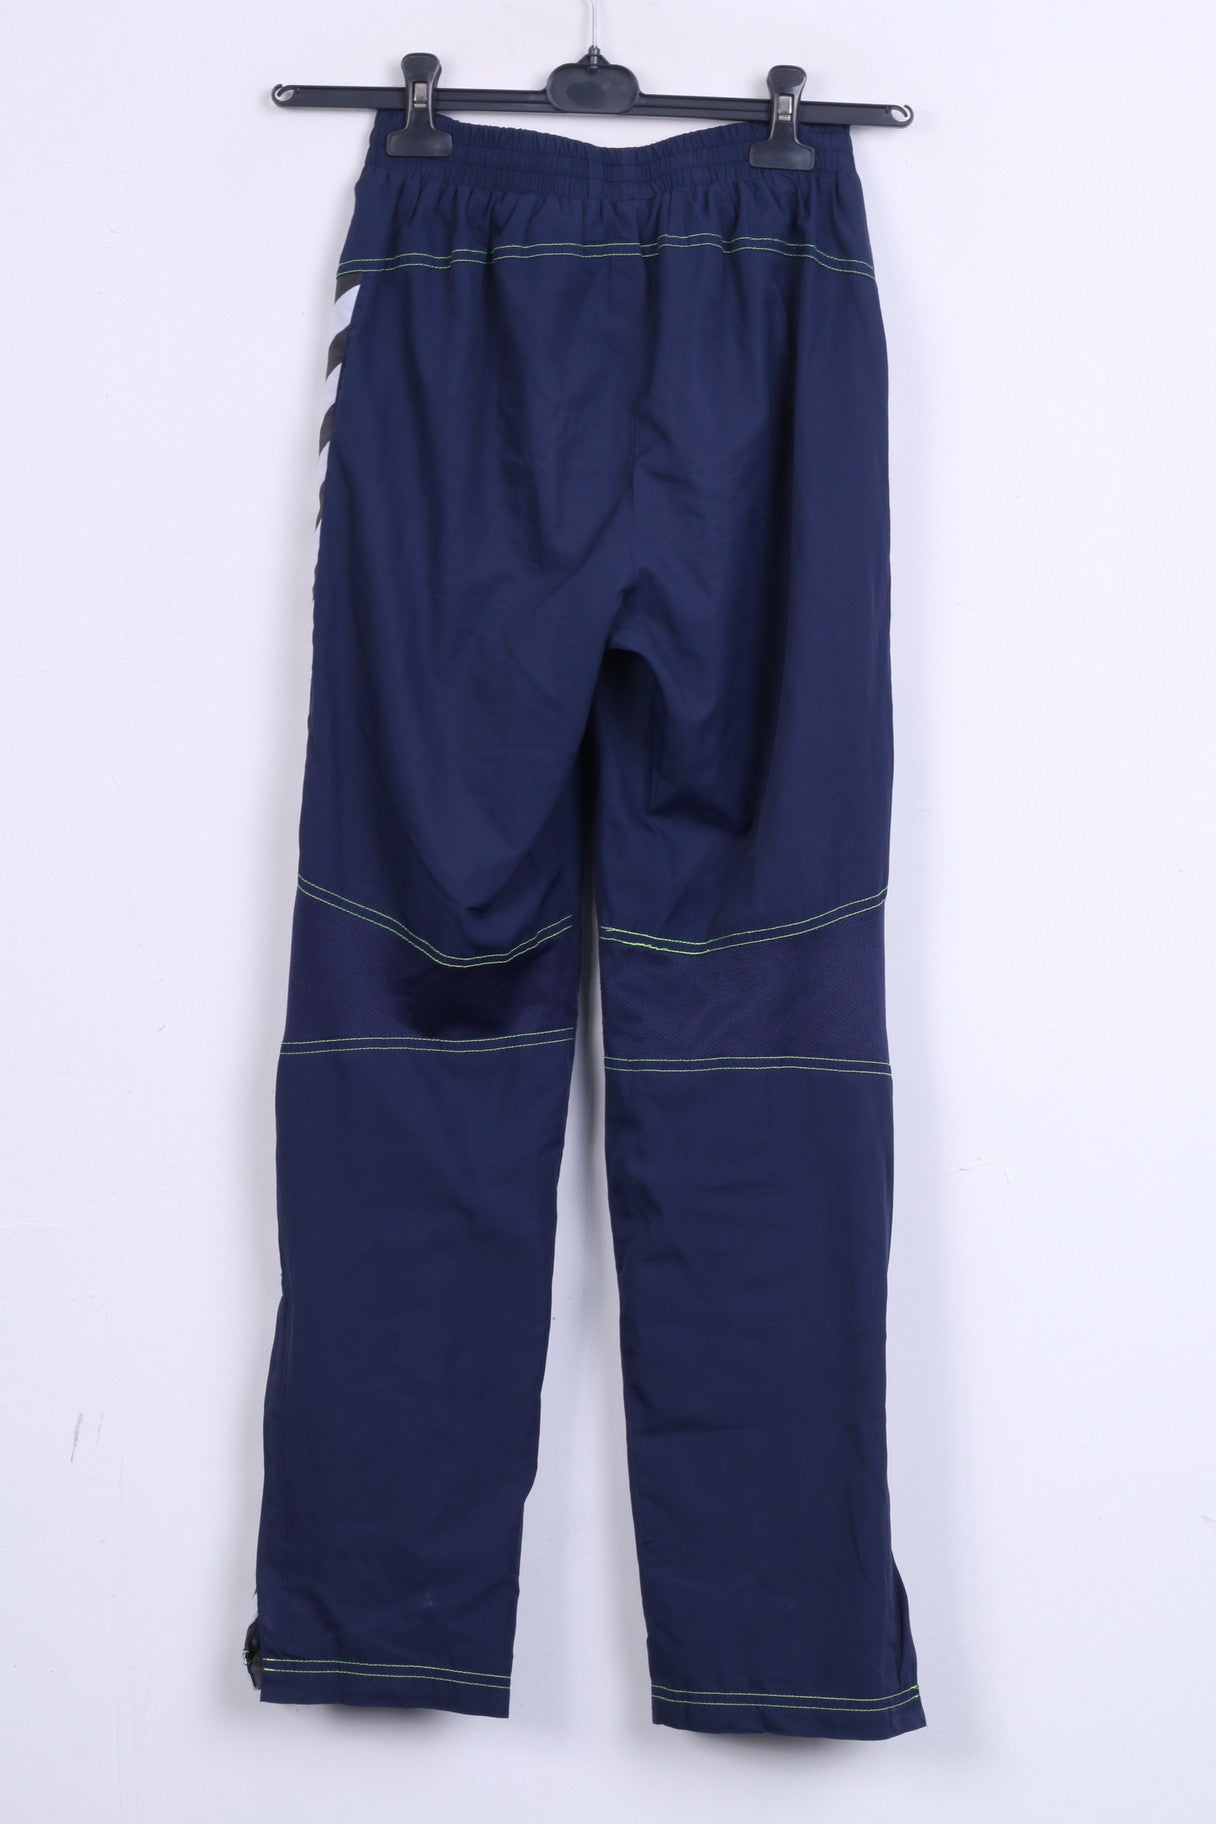 Pantaloni HUMMEL da uomo YL 16/176 Pantaloni blu Tuta da allenamento sportiva